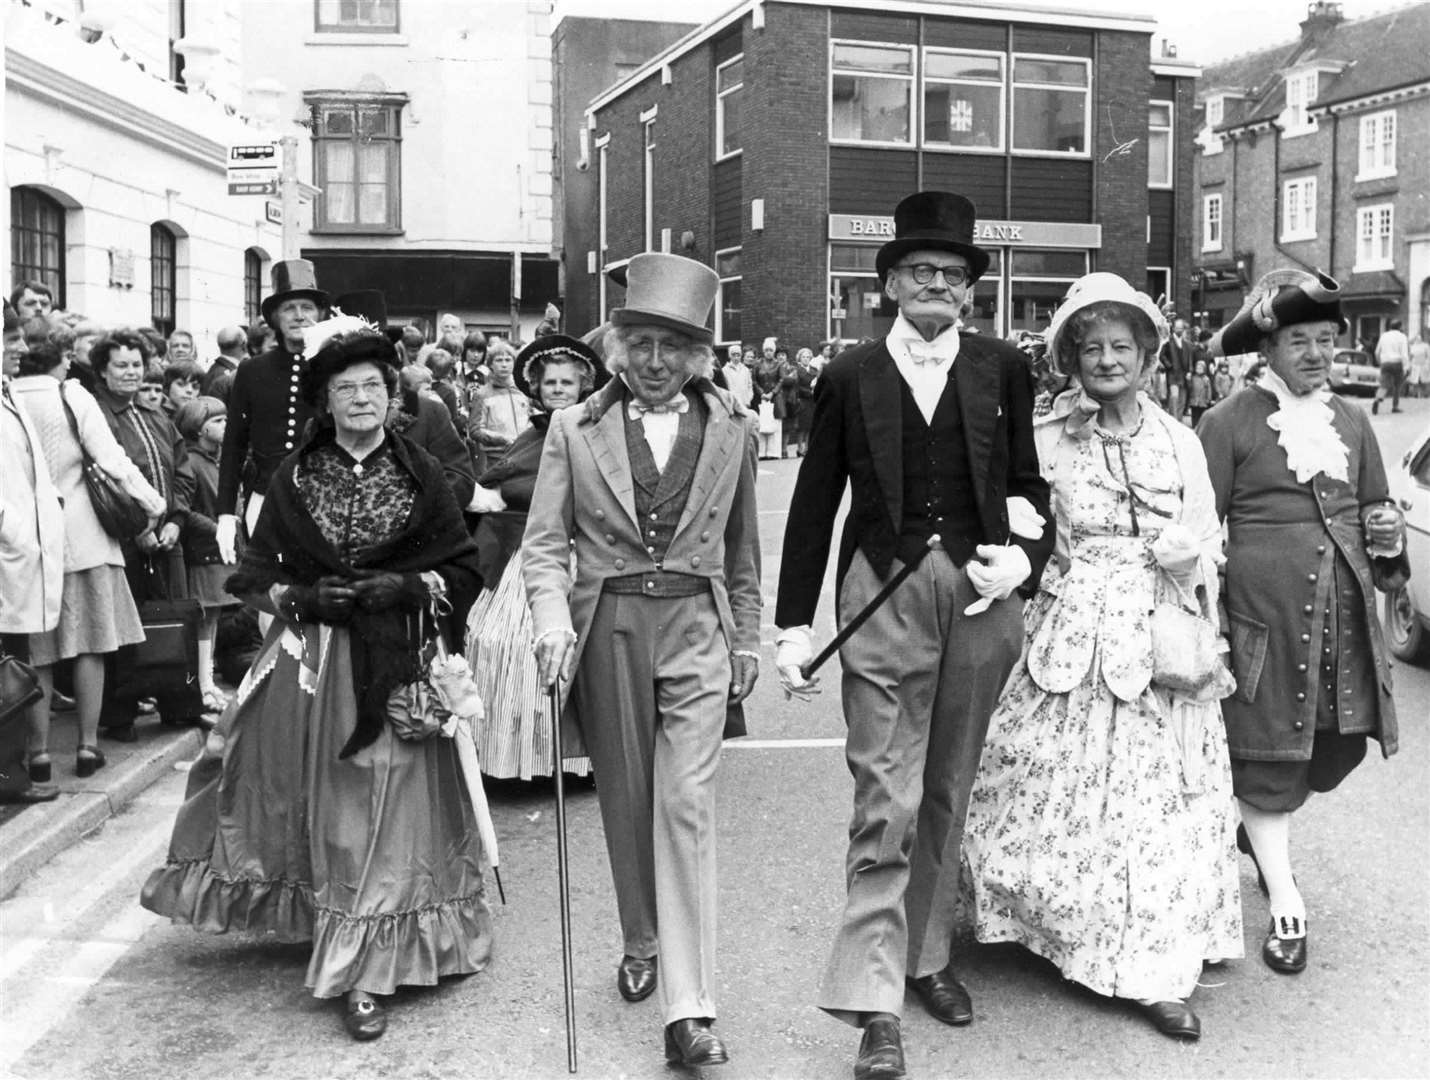 Broadstairs Dickens Festival in 1977